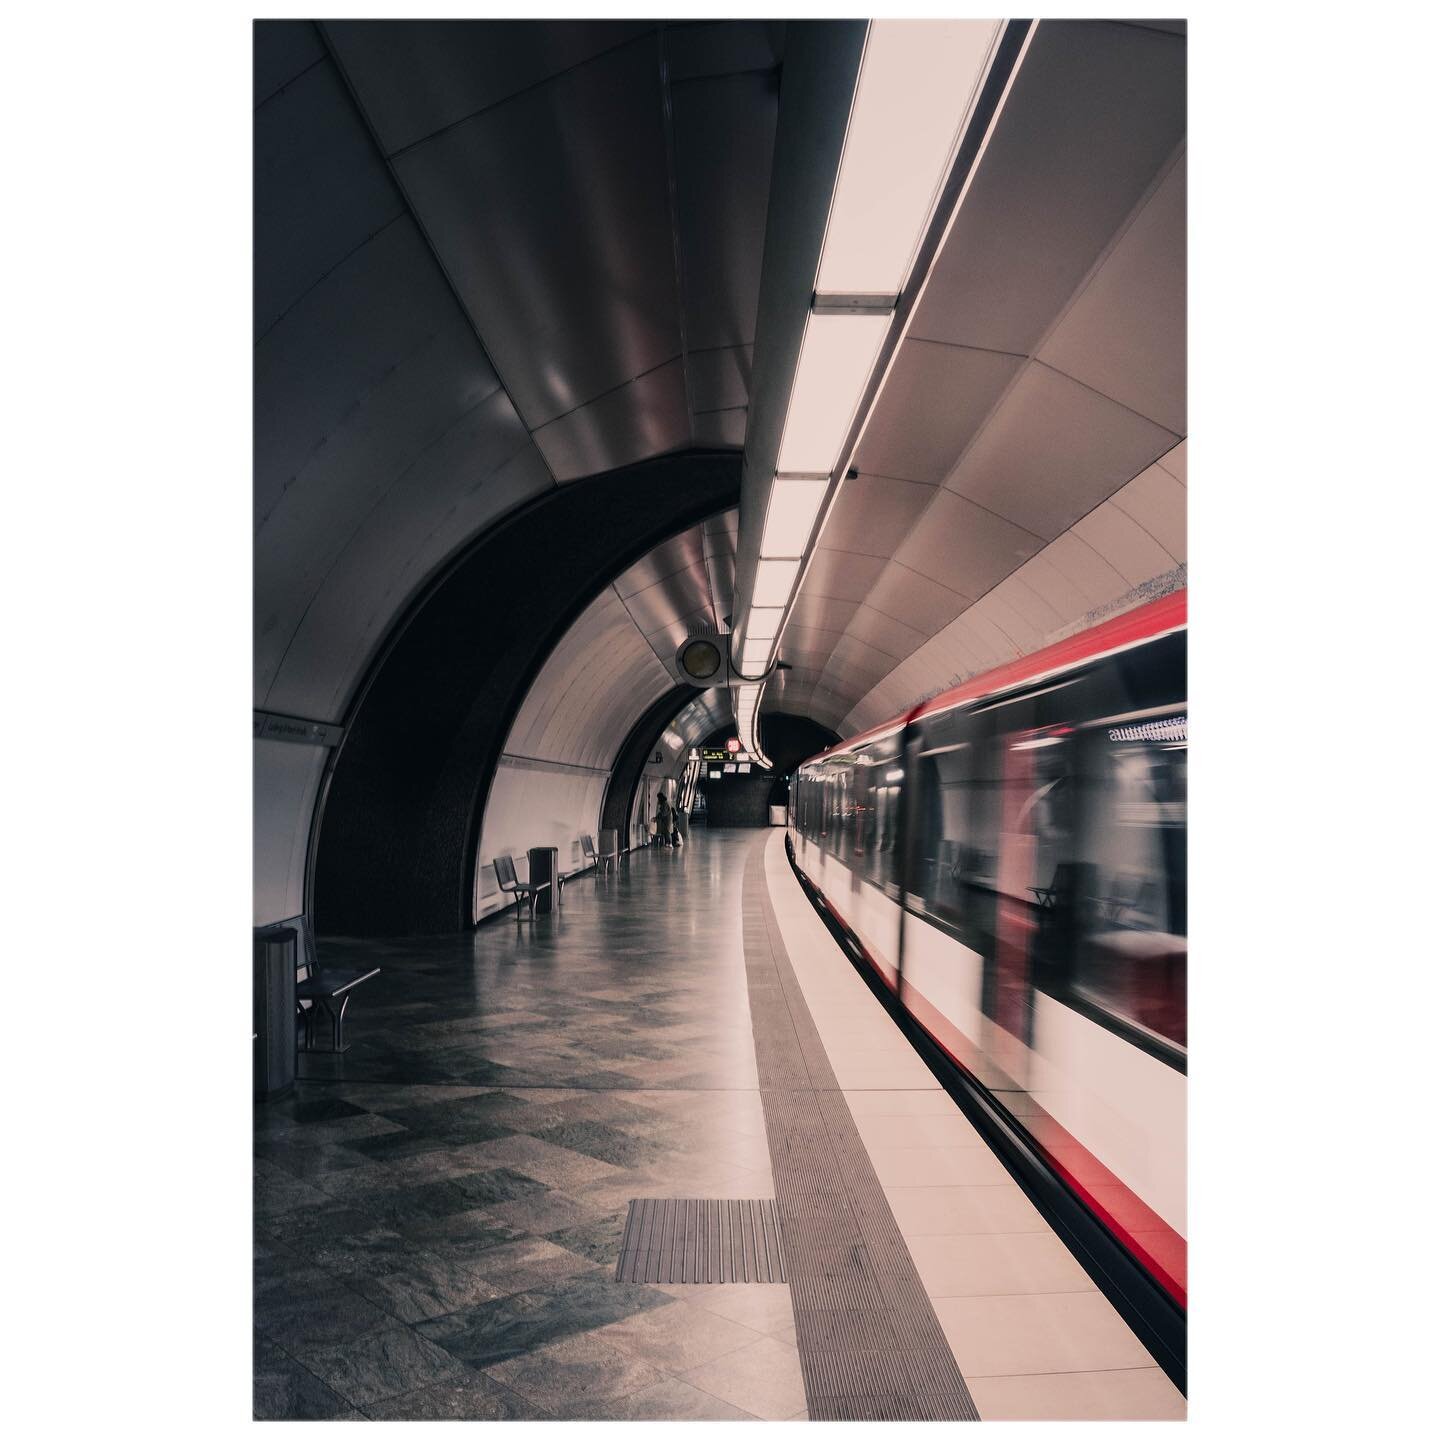 Back under the street in 📍 F&uuml;rth !
&bull;
&bull;
#ubahn #f&uuml;rth #nuernberg #igersf&uuml;rth #fuerth_erleben #igersn&uuml;rnberg #germany #subway #urbanart #untoldstories #metro #underground #lights #travel #architecture #photography #street